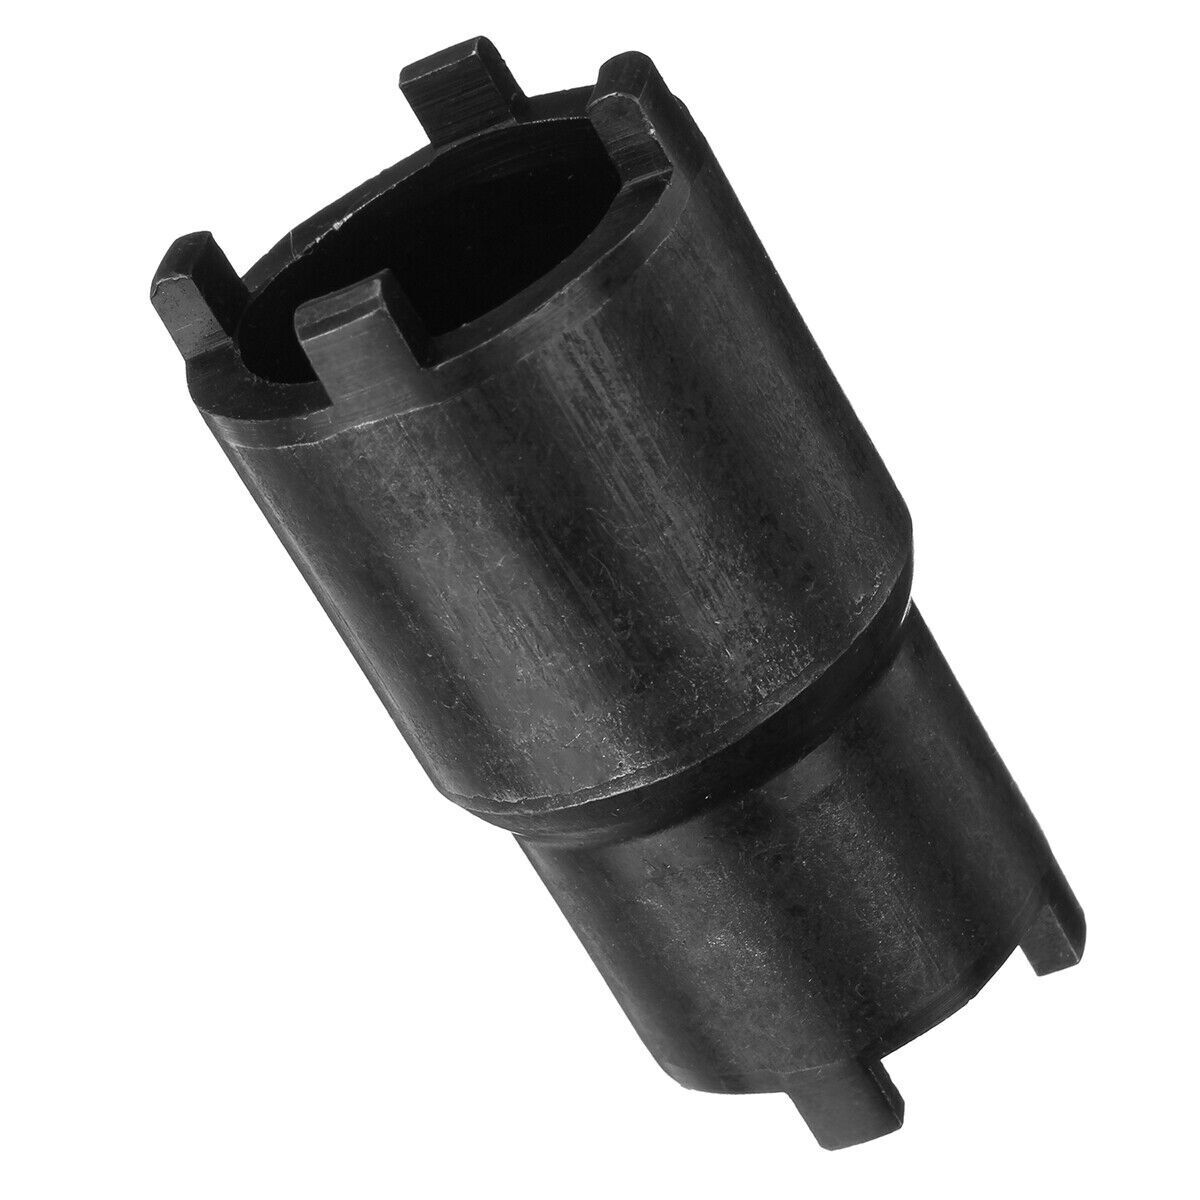 20mm 24mm Honda Clutch Lock Nut Tool Spanner Socket for Honda Pit Dirt Bike ATV